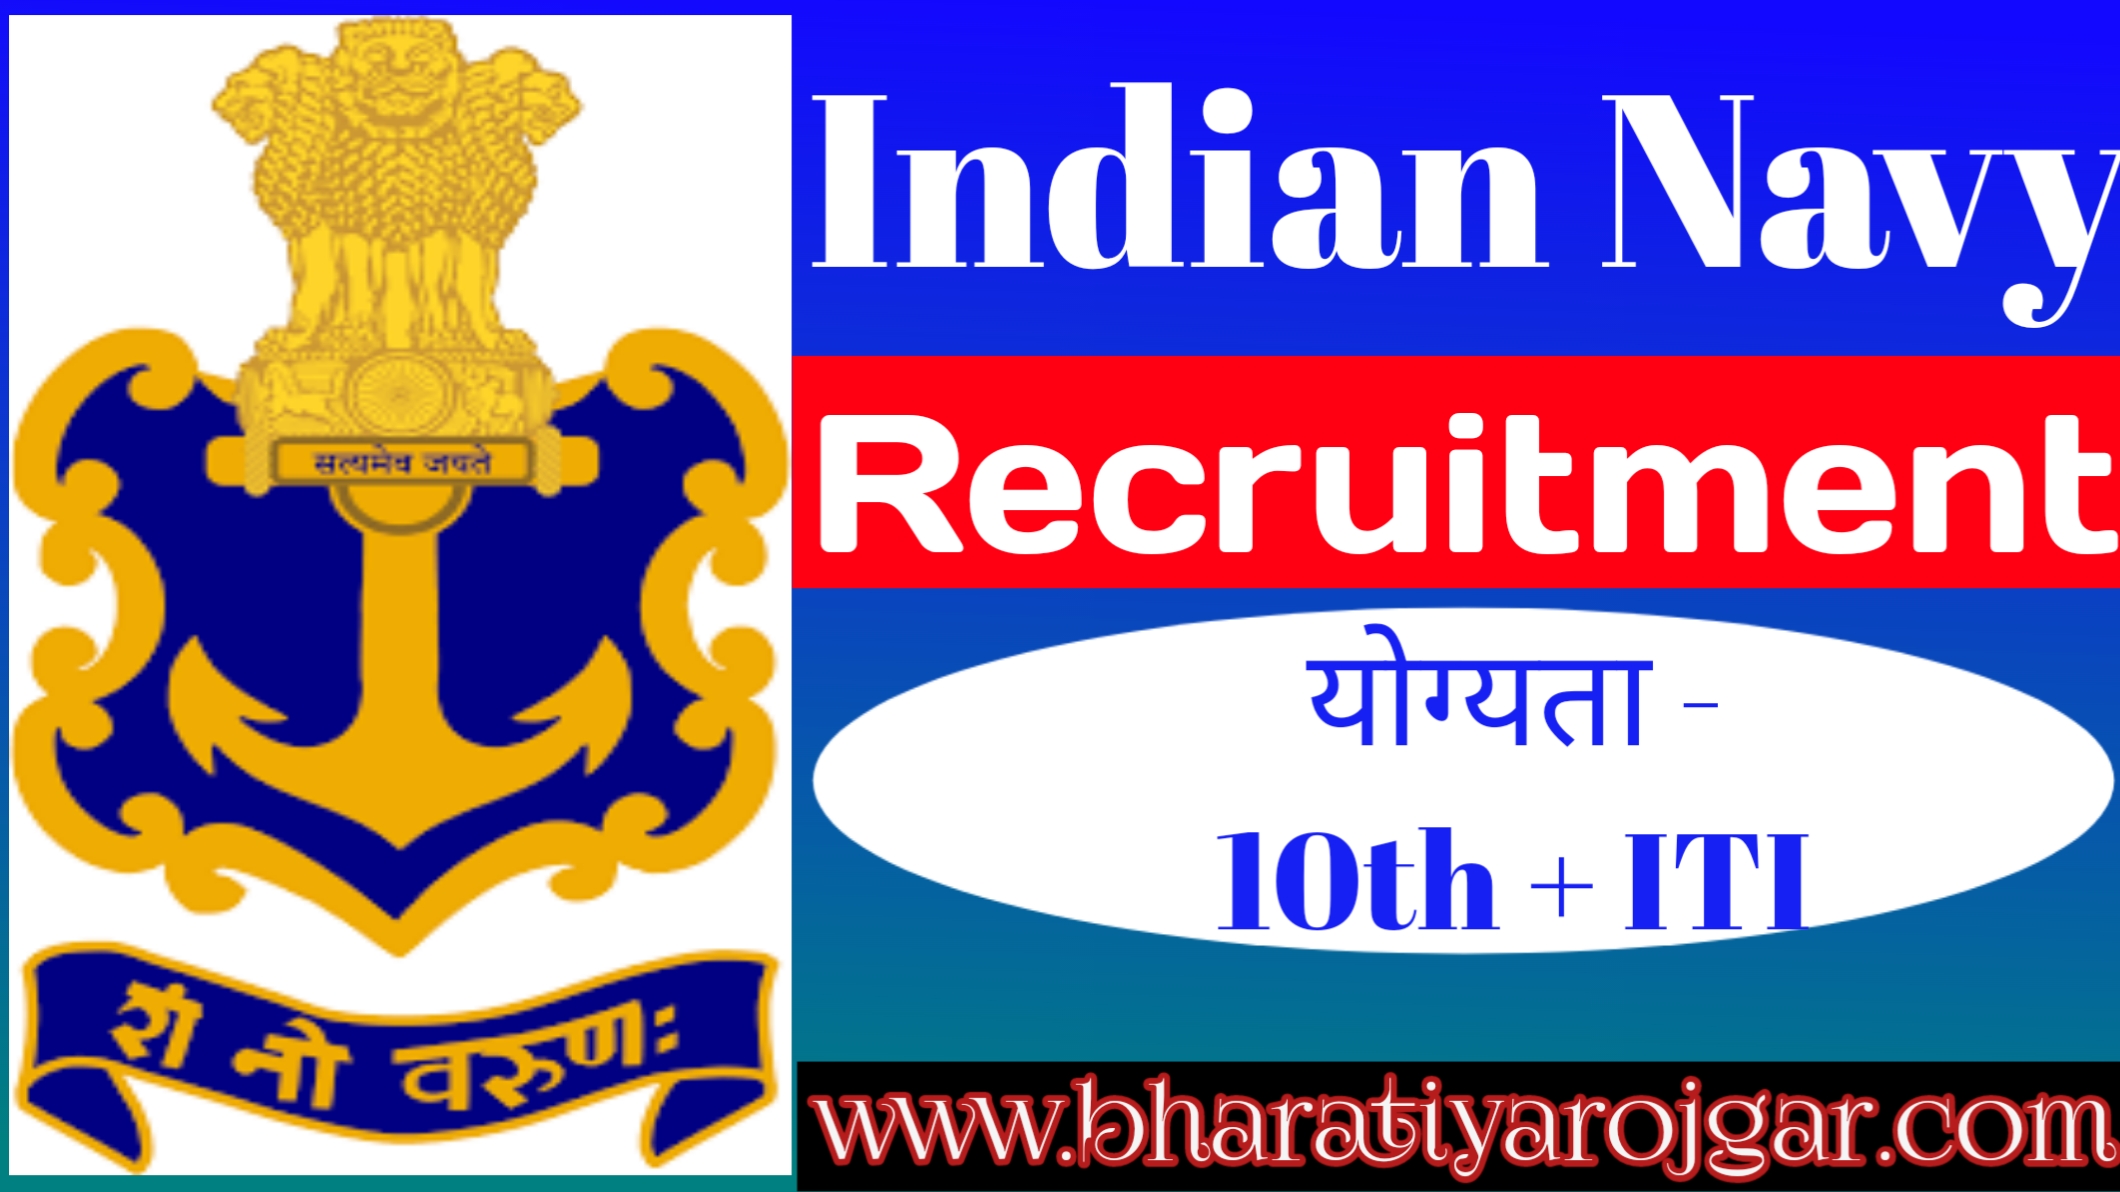 Indian Navy Apprentice Recruitment 2023